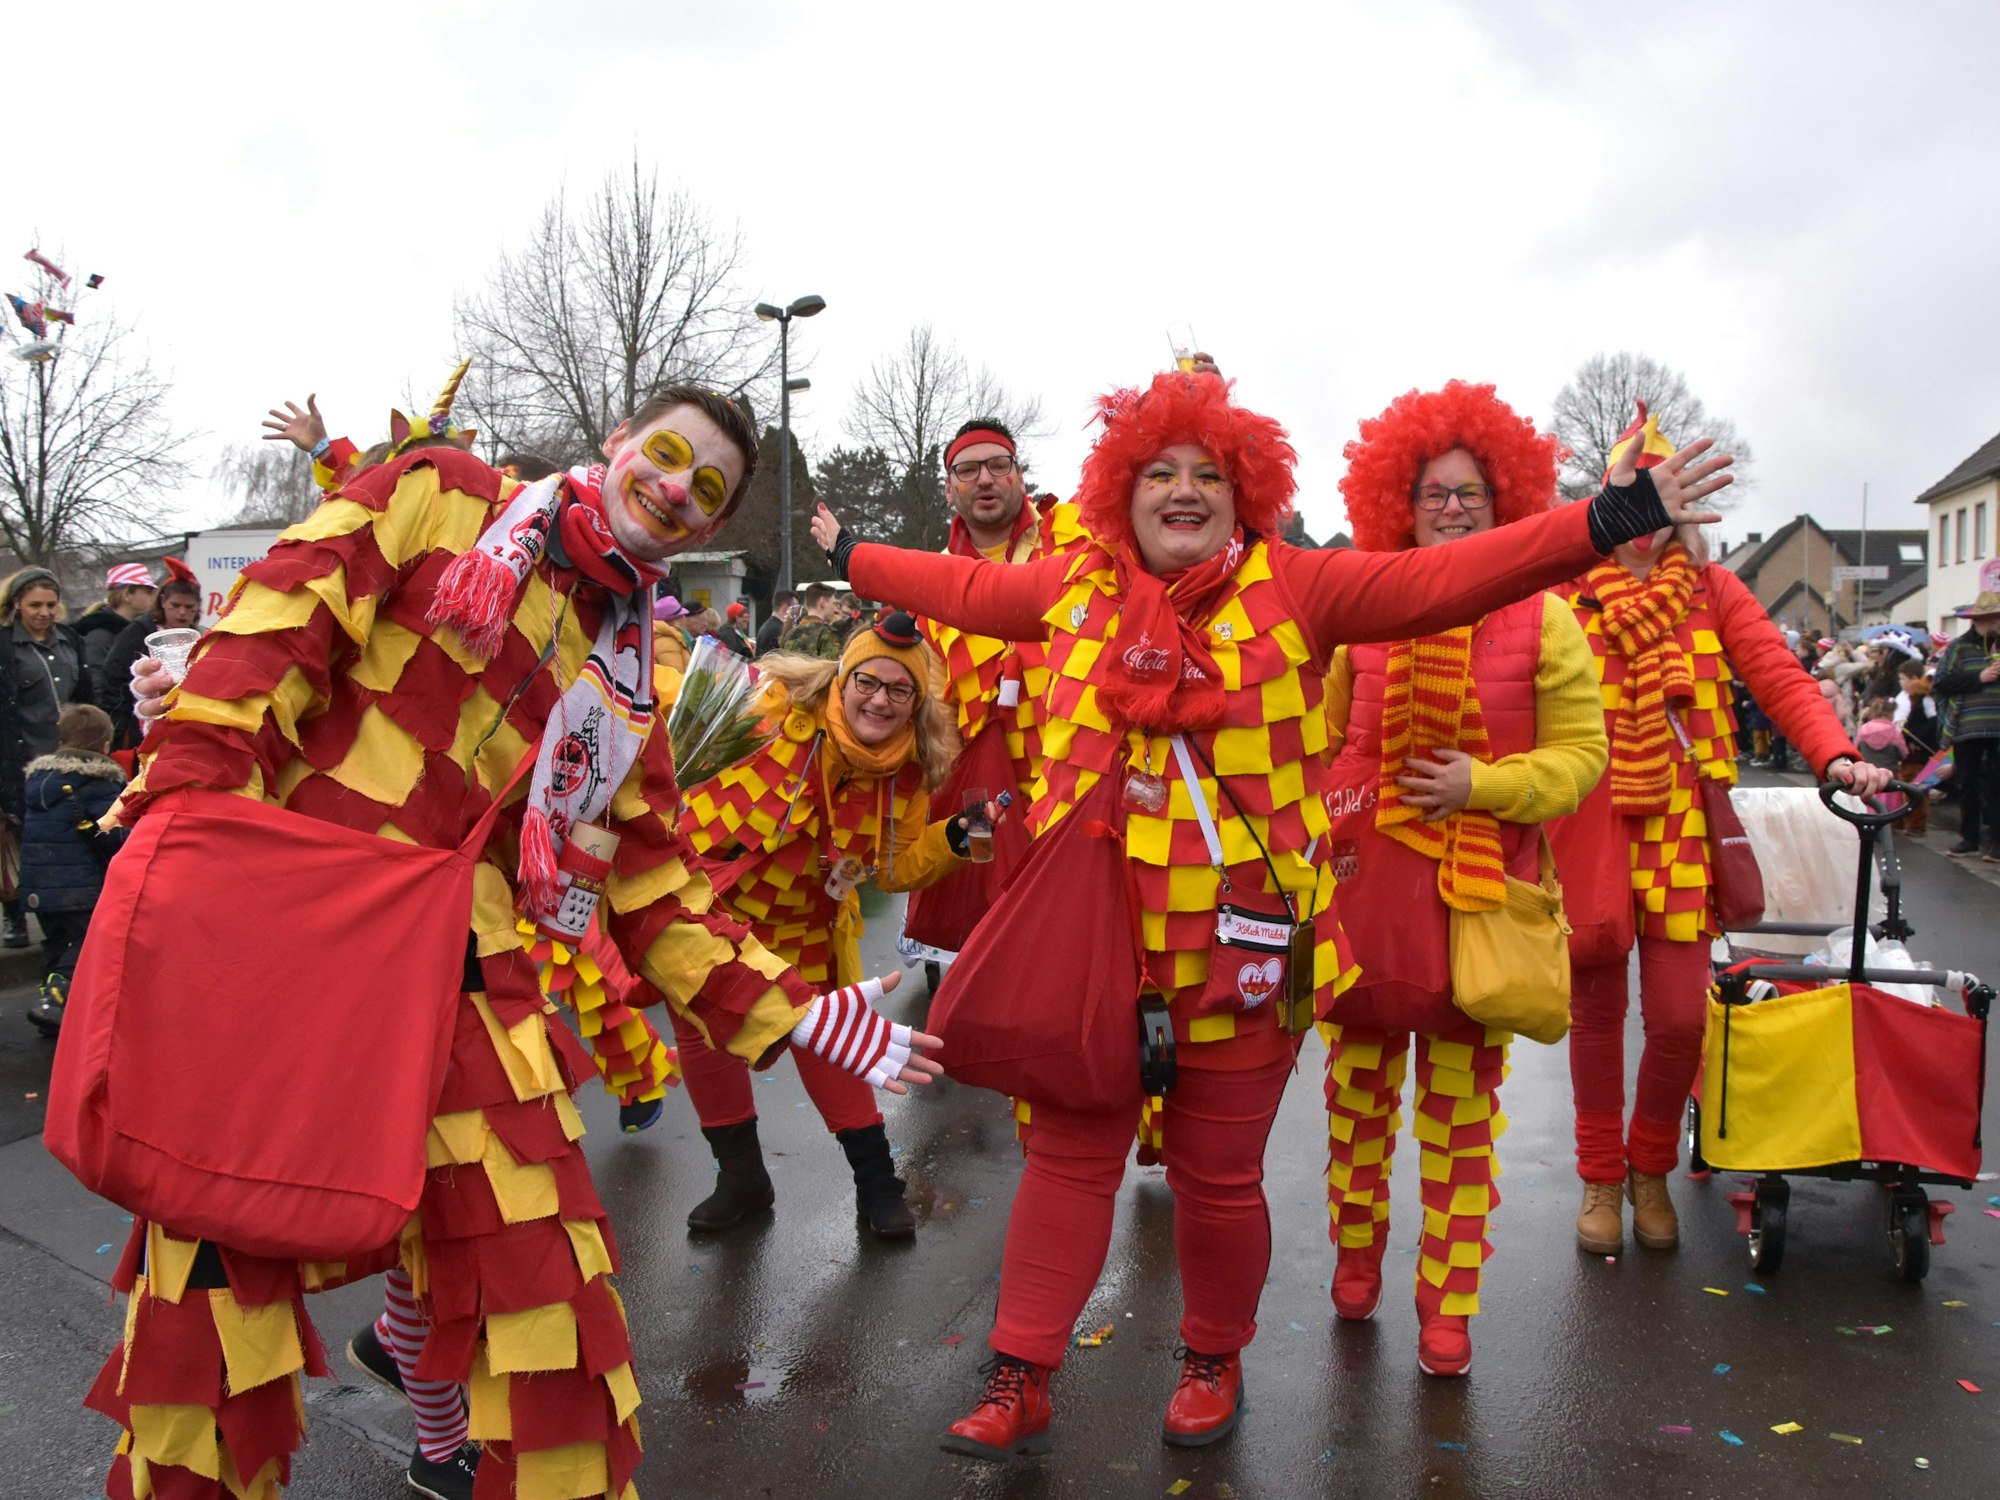 Kostümierte feiern in gelb-rot karierten Clowns-Anzügen.